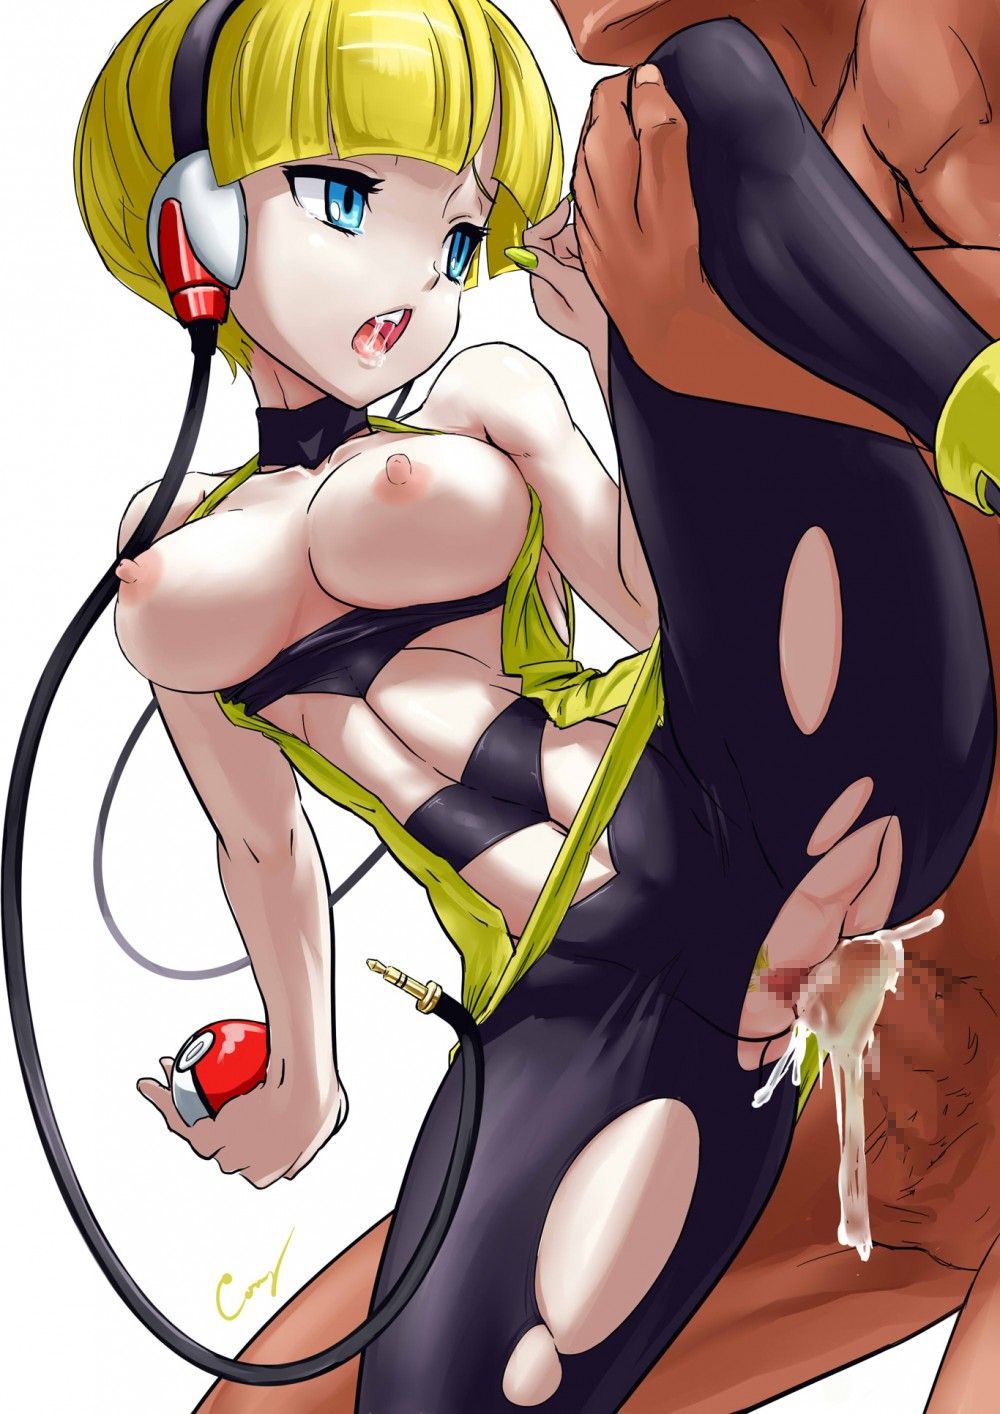 [Pokemon] Pokemon heroine, her trainer MoE erotic pictures part 6 2